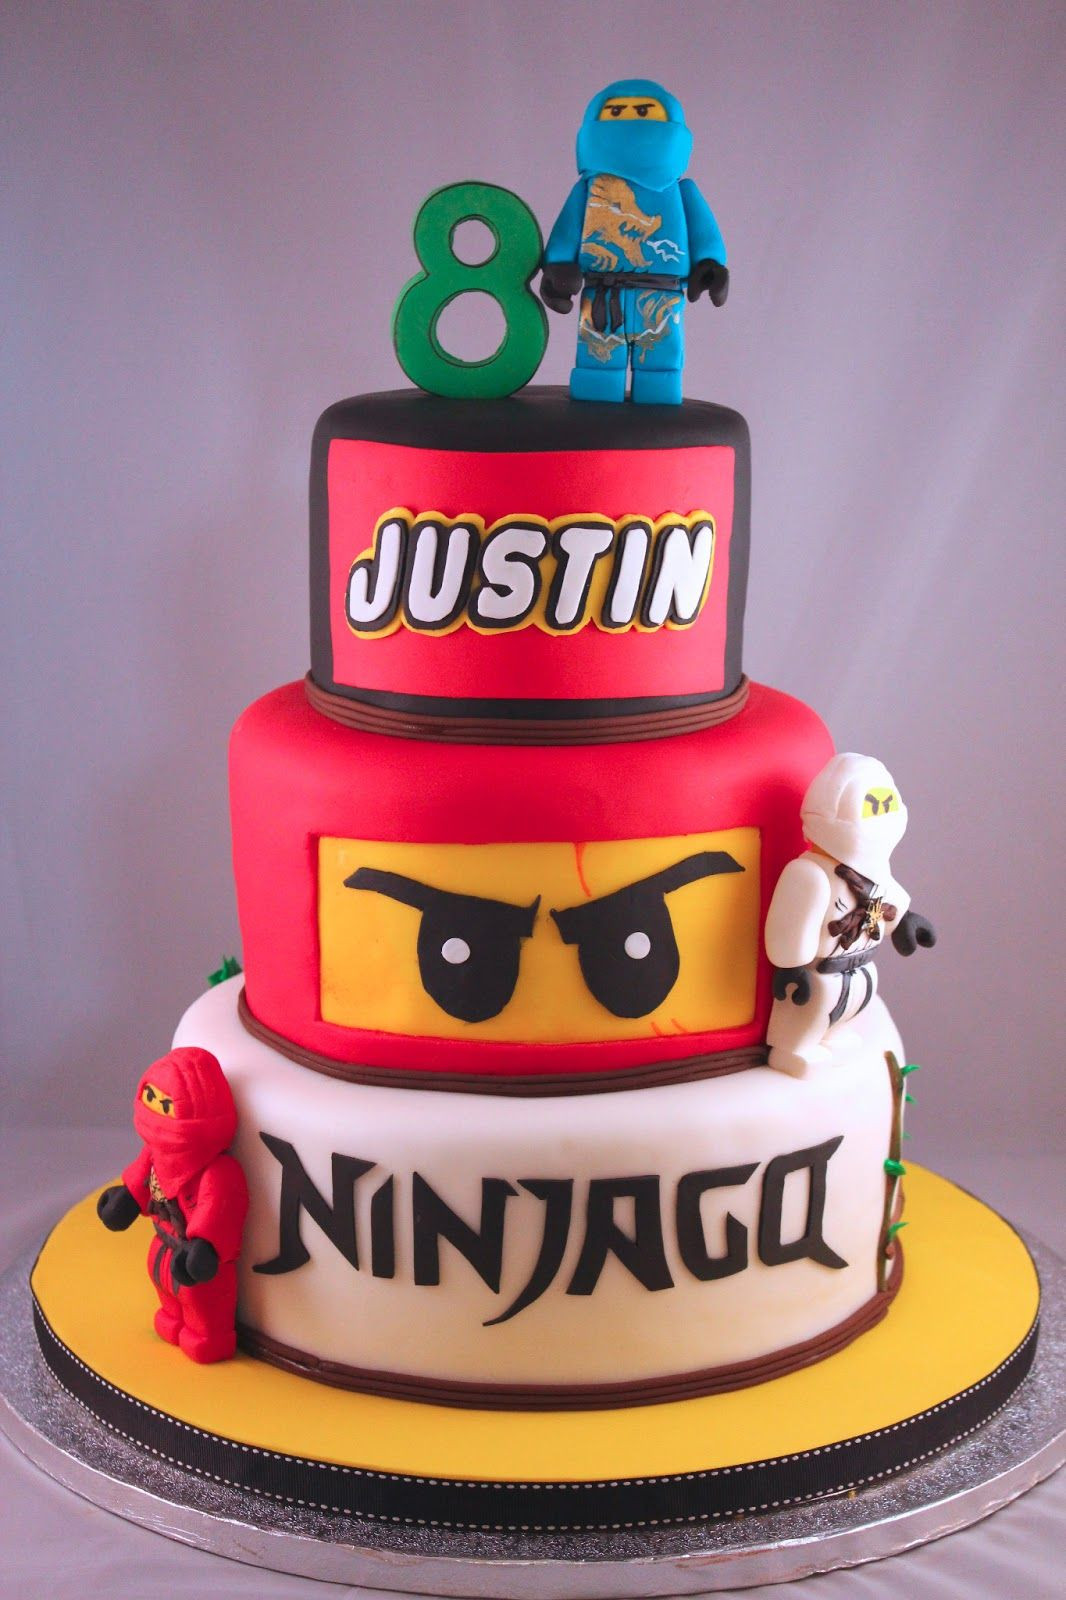 Ninjago Birthday Cake
 ninjago fondant cakes